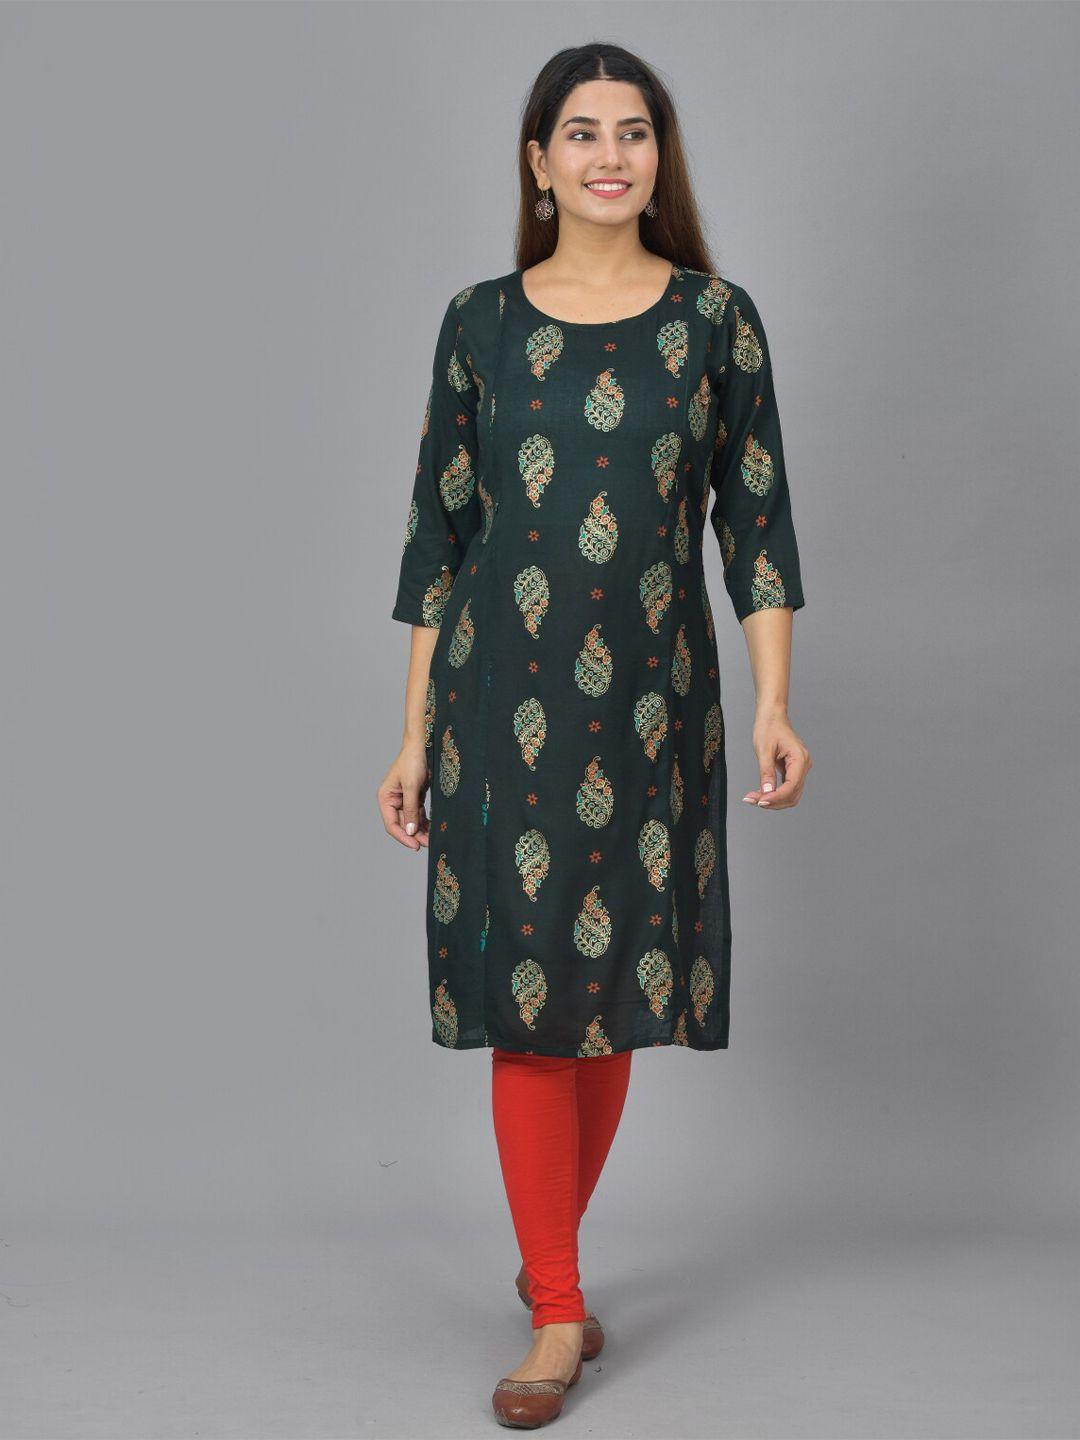 kalini-green-ethnic-motifs-maternity-a-line-dress